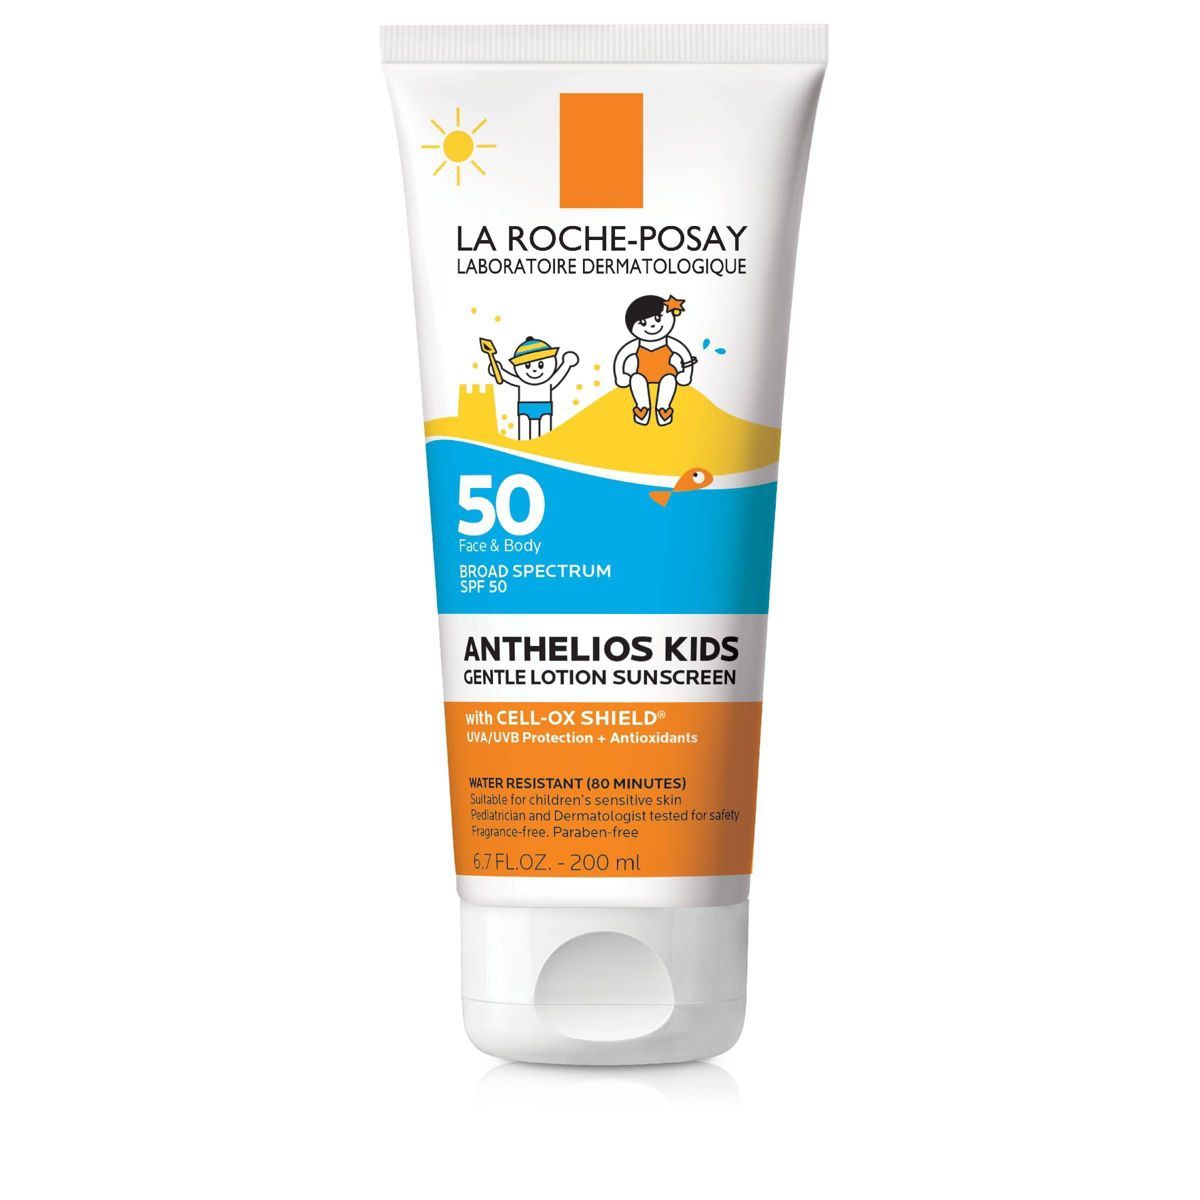 La Roche Posay Anthelios Kids Gentle Lotion Sunscreen - SPF 50 - 6.7 fl oz | Target